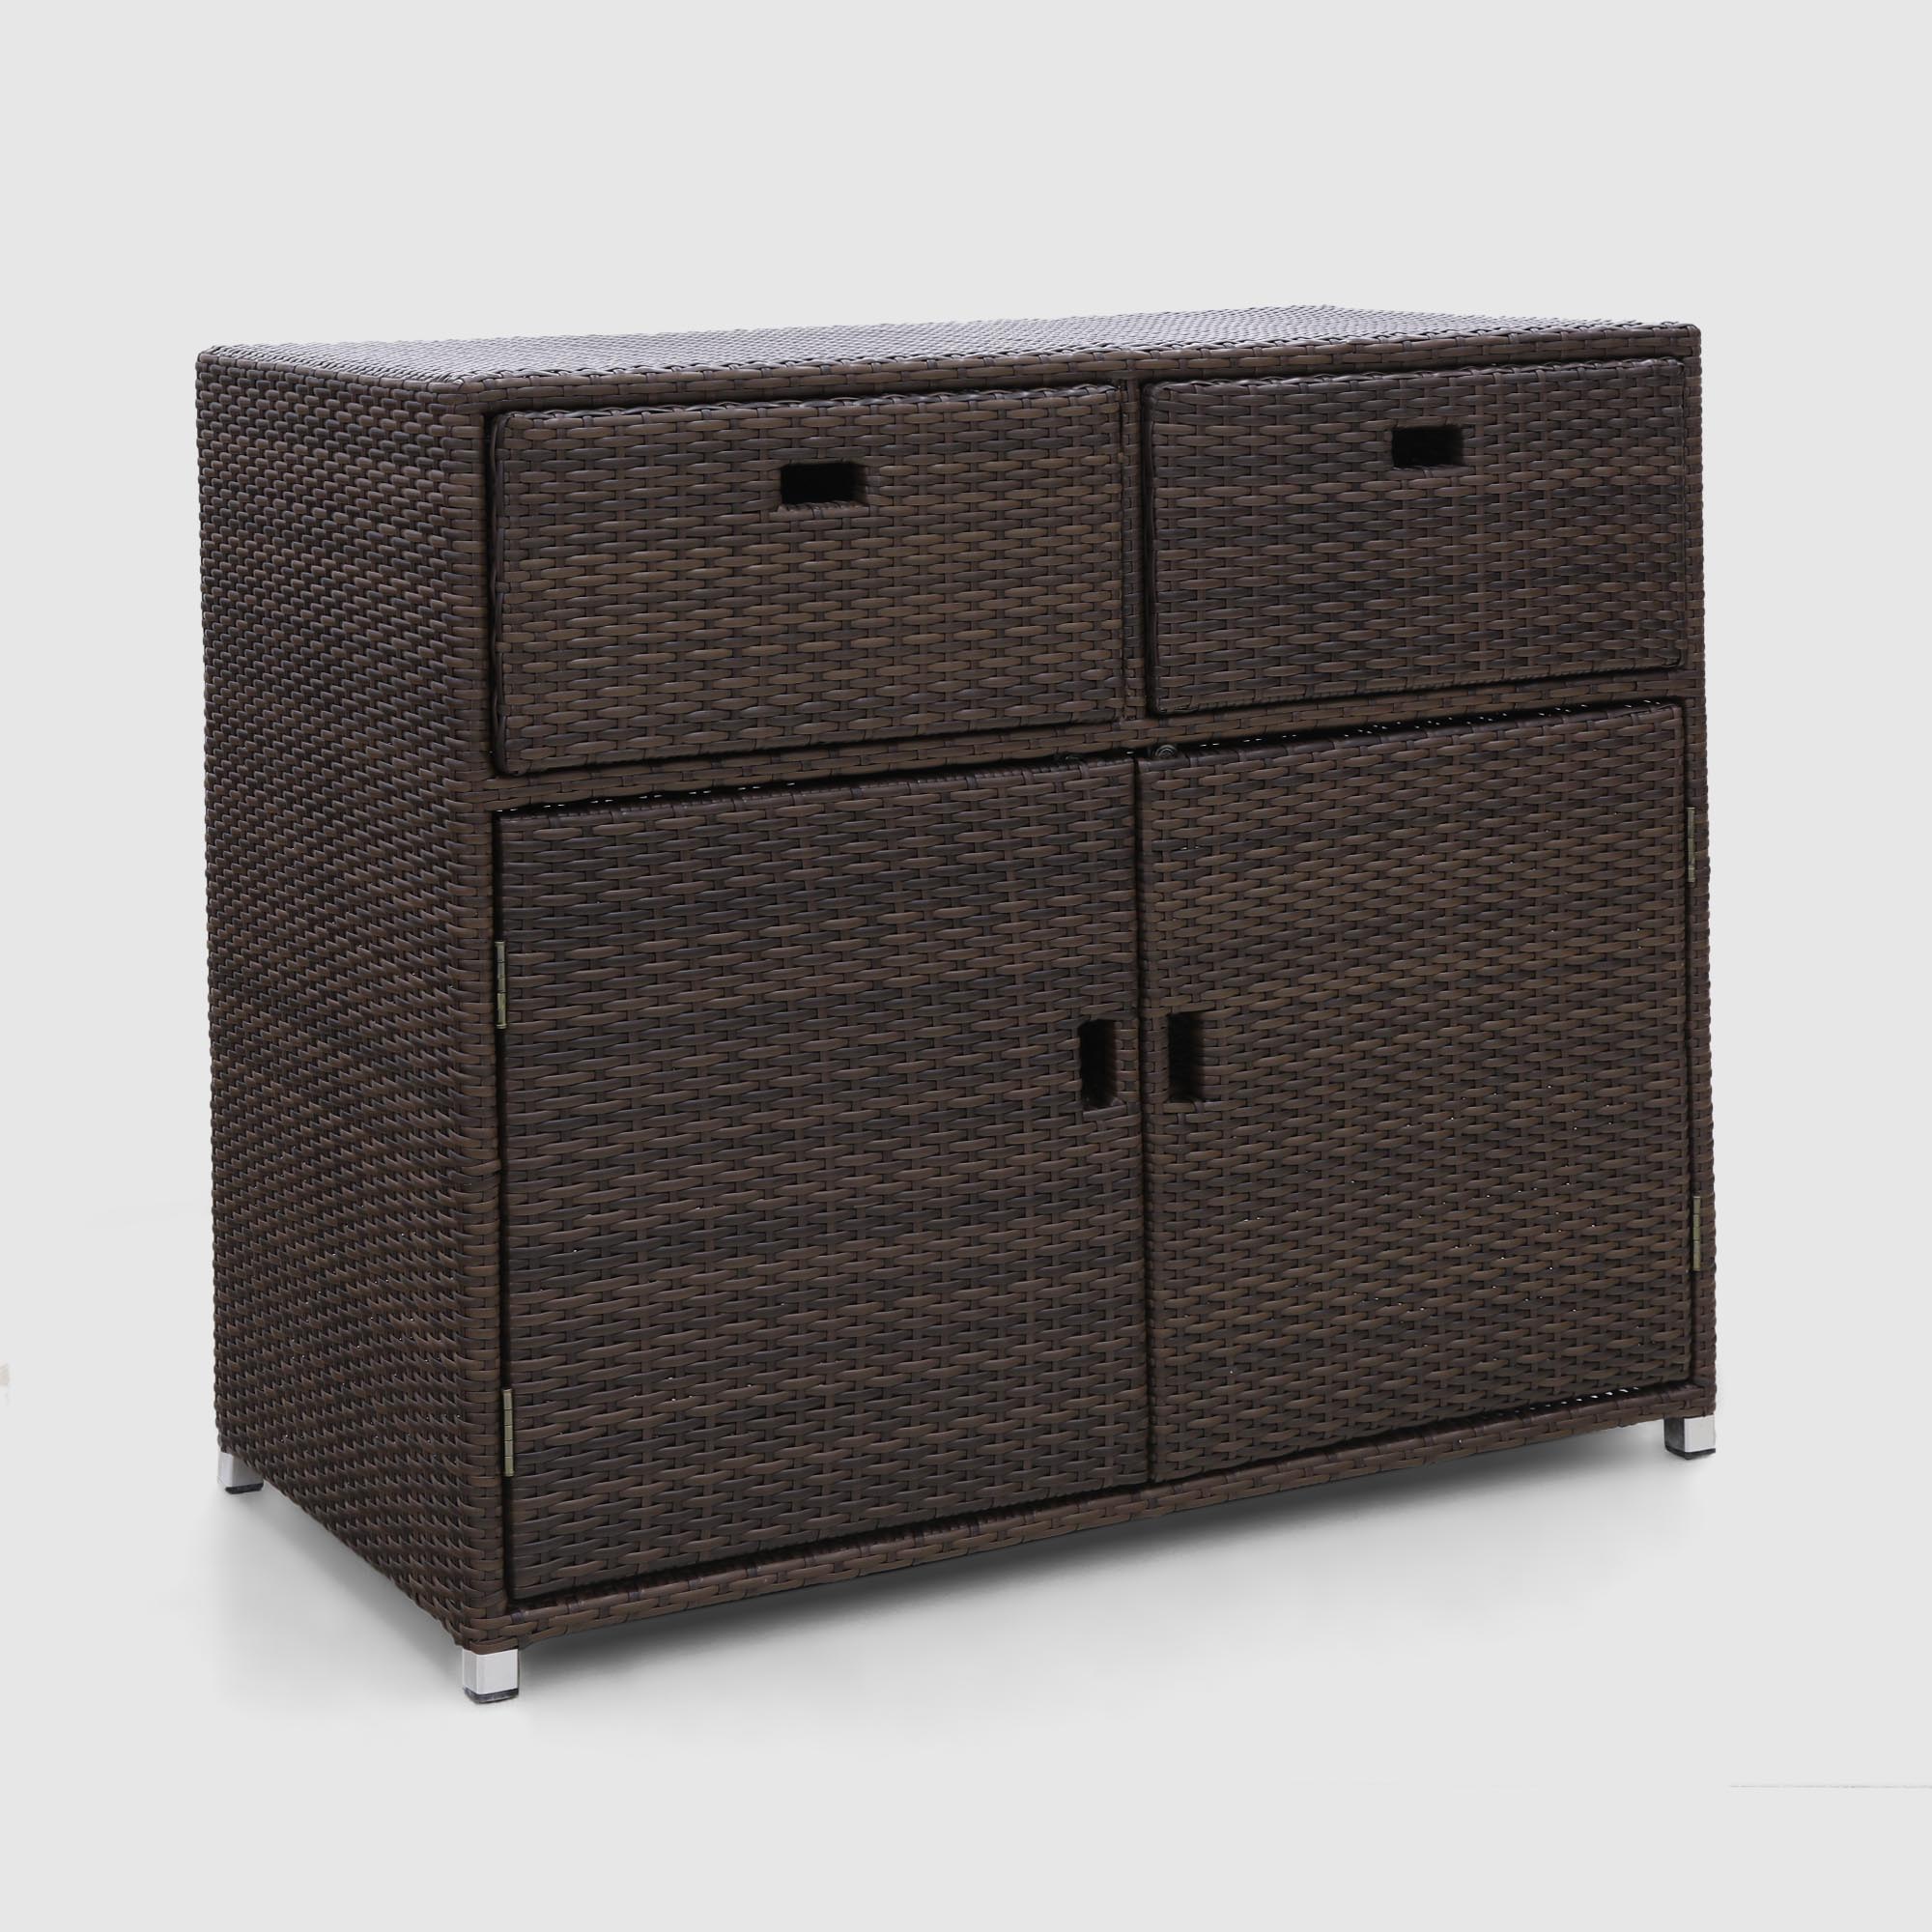 Шкаф Ns Rattan Small box темно-коричневый кресло ns rattan mavi 57x59x87cm темно коричневое